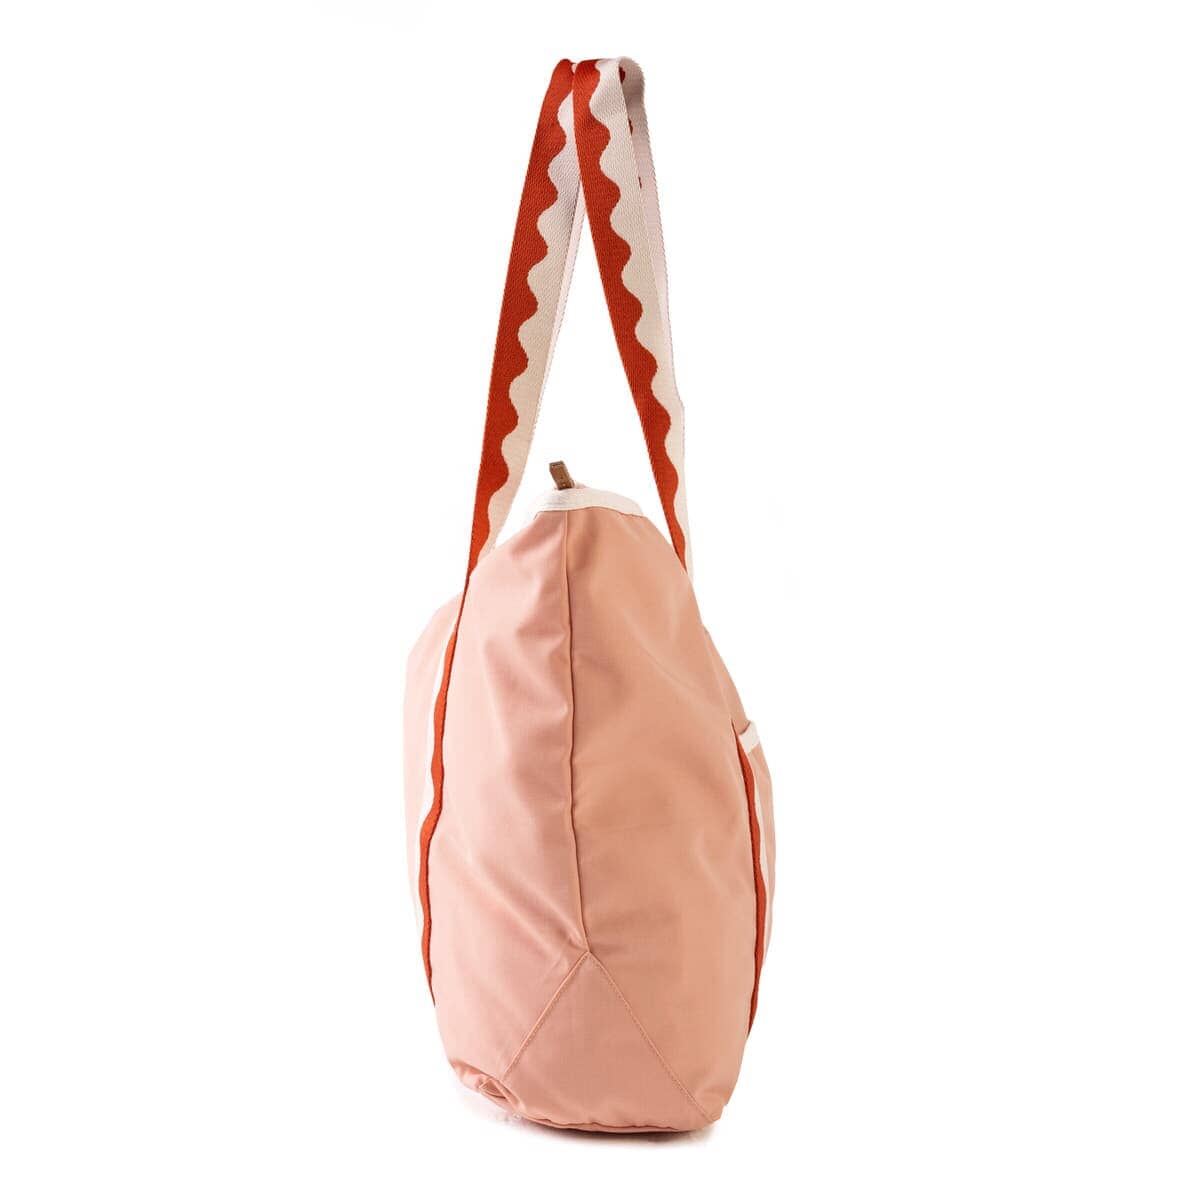 Studio image of the riviera pink beach bag 